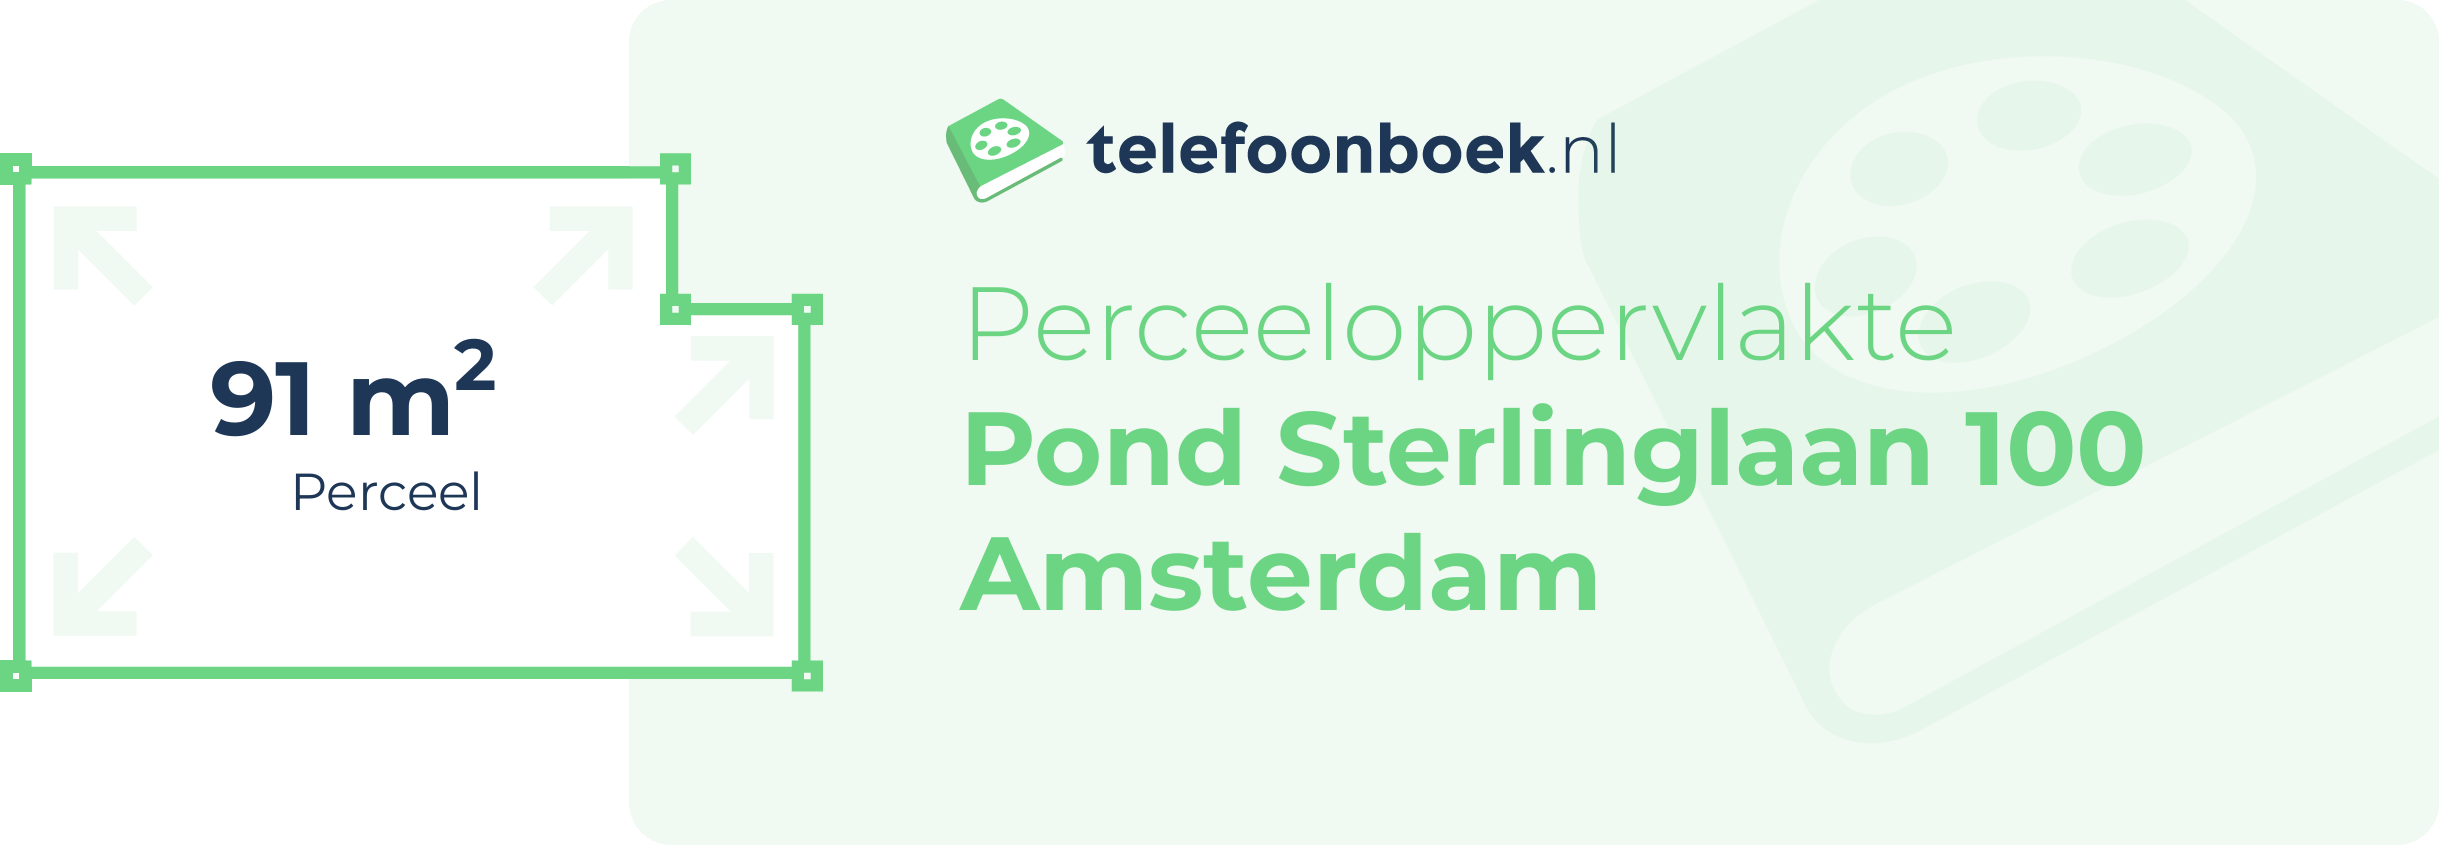 Perceeloppervlakte Pond Sterlinglaan 100 Amsterdam